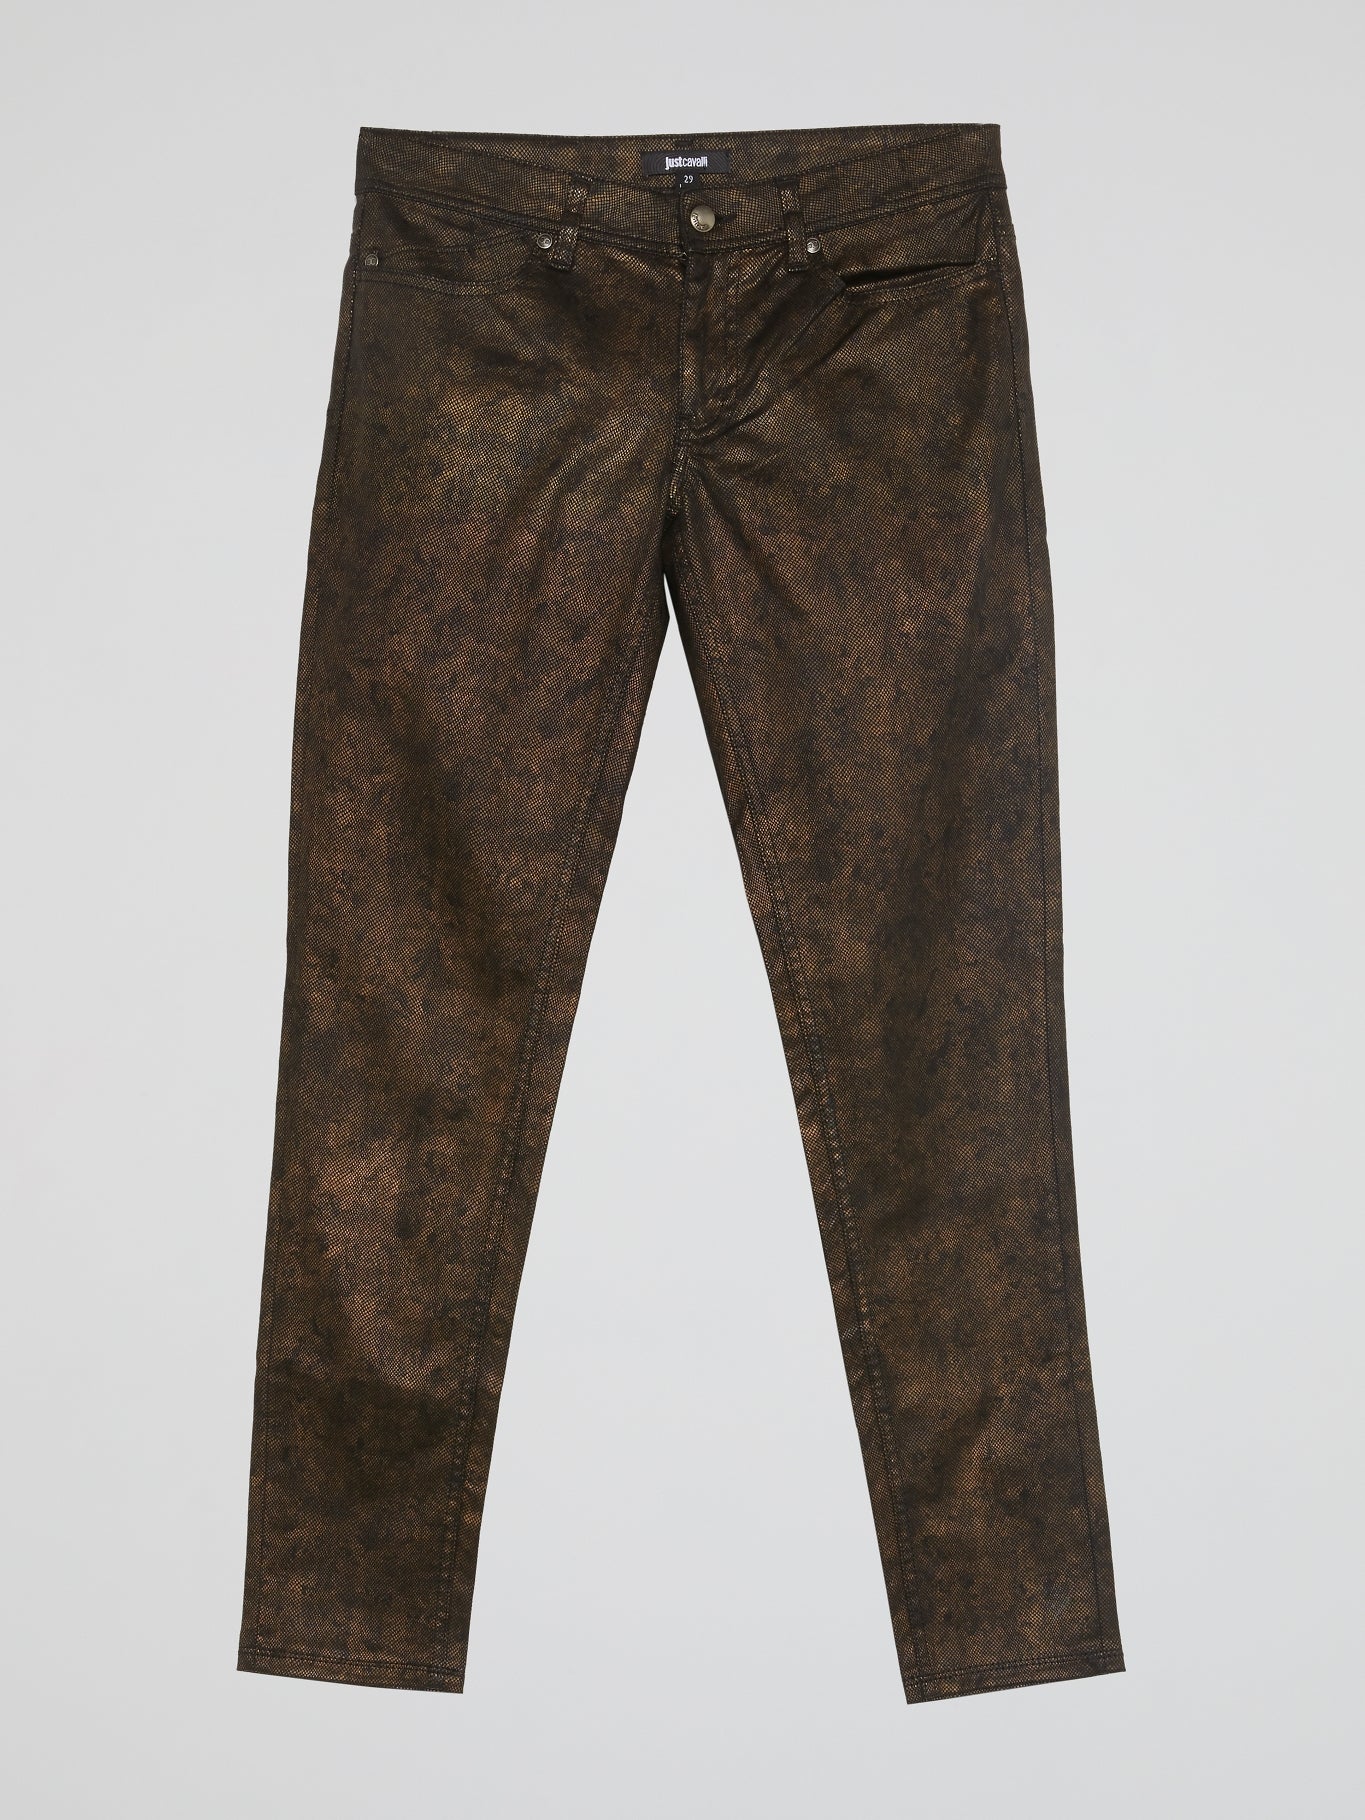 Brown Rustic Pants